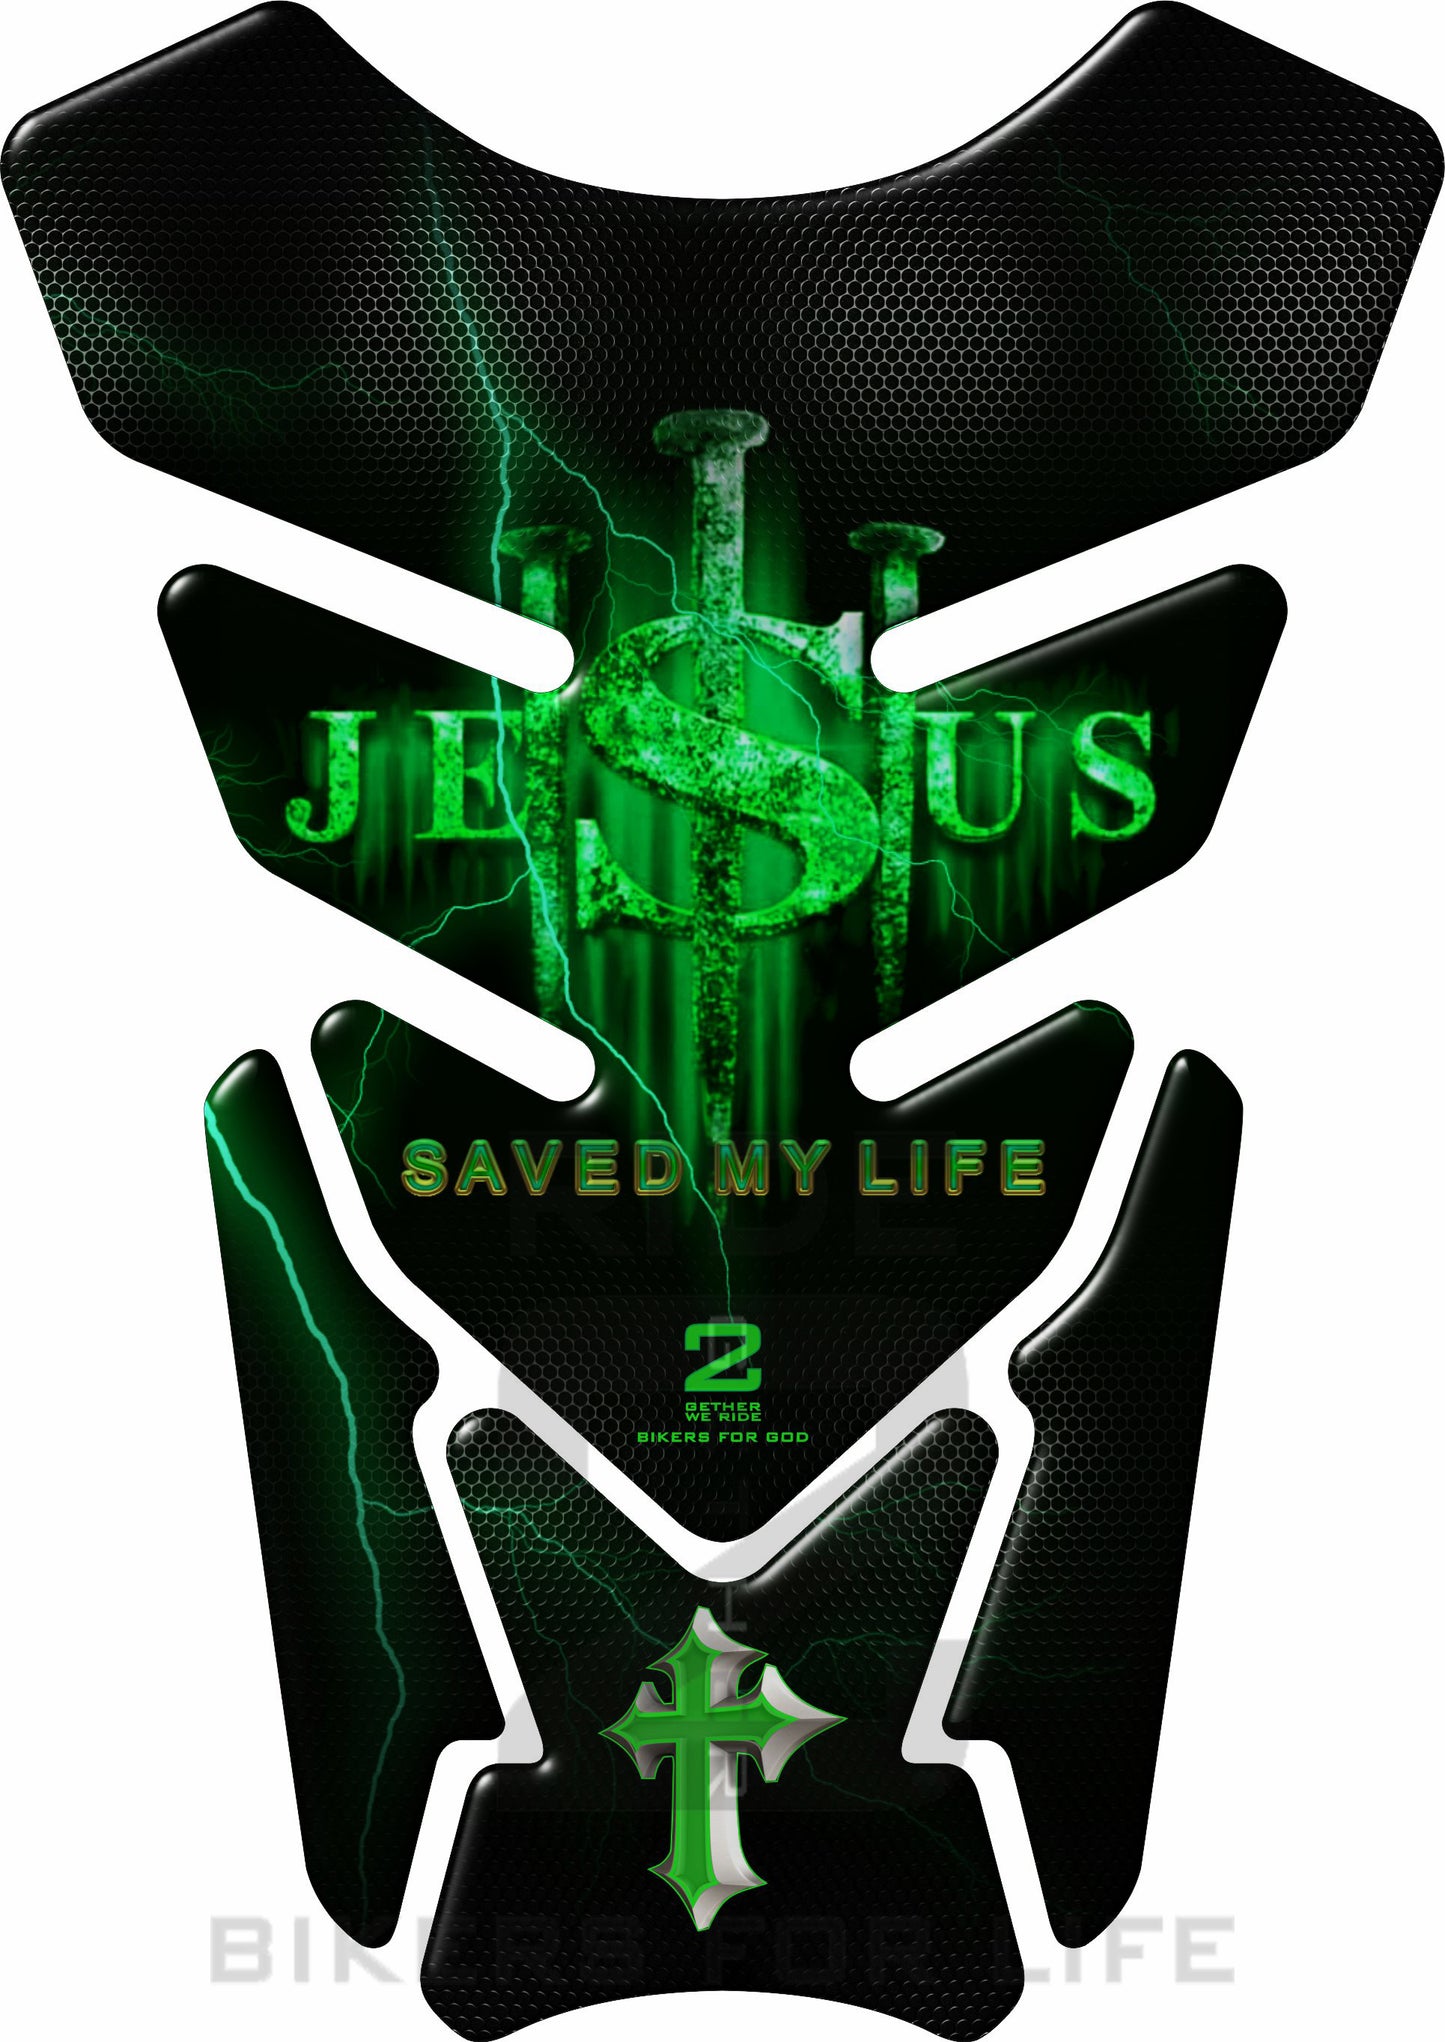 Religious Range. Jesus saved my life  Green Universal Fit. Christian tank pad.